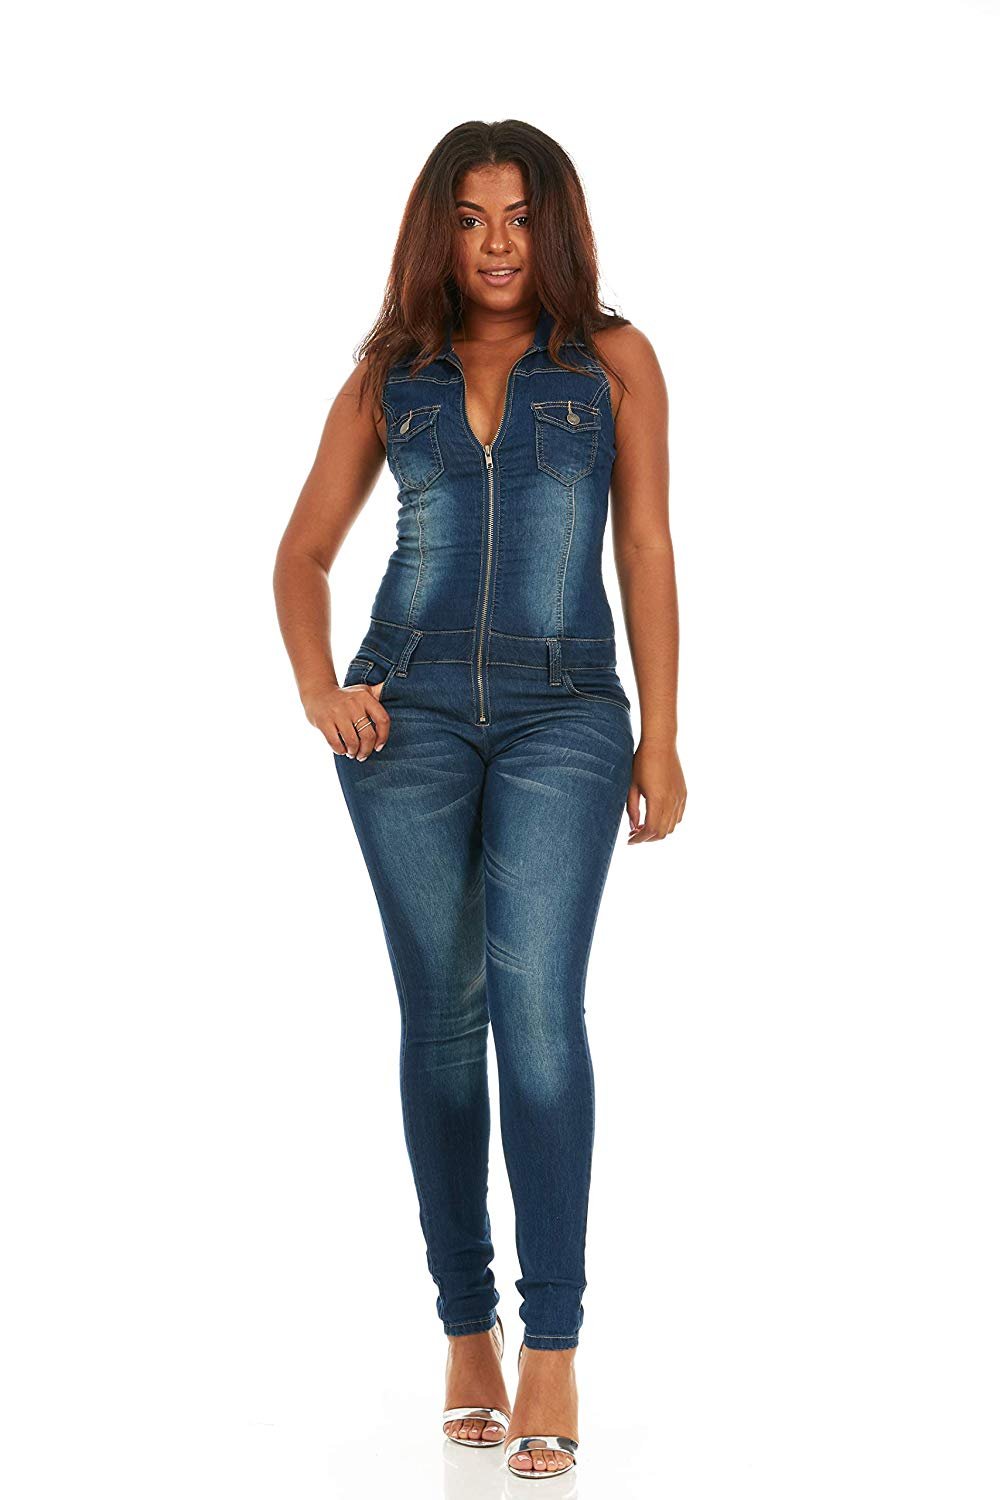 Cute Teen Girl Denim Jumpsuit Jeans for Teen Girls Sleeveless Skinny Fit Overall Junior Size 5 Dark Blue Denim - image 2 of 6